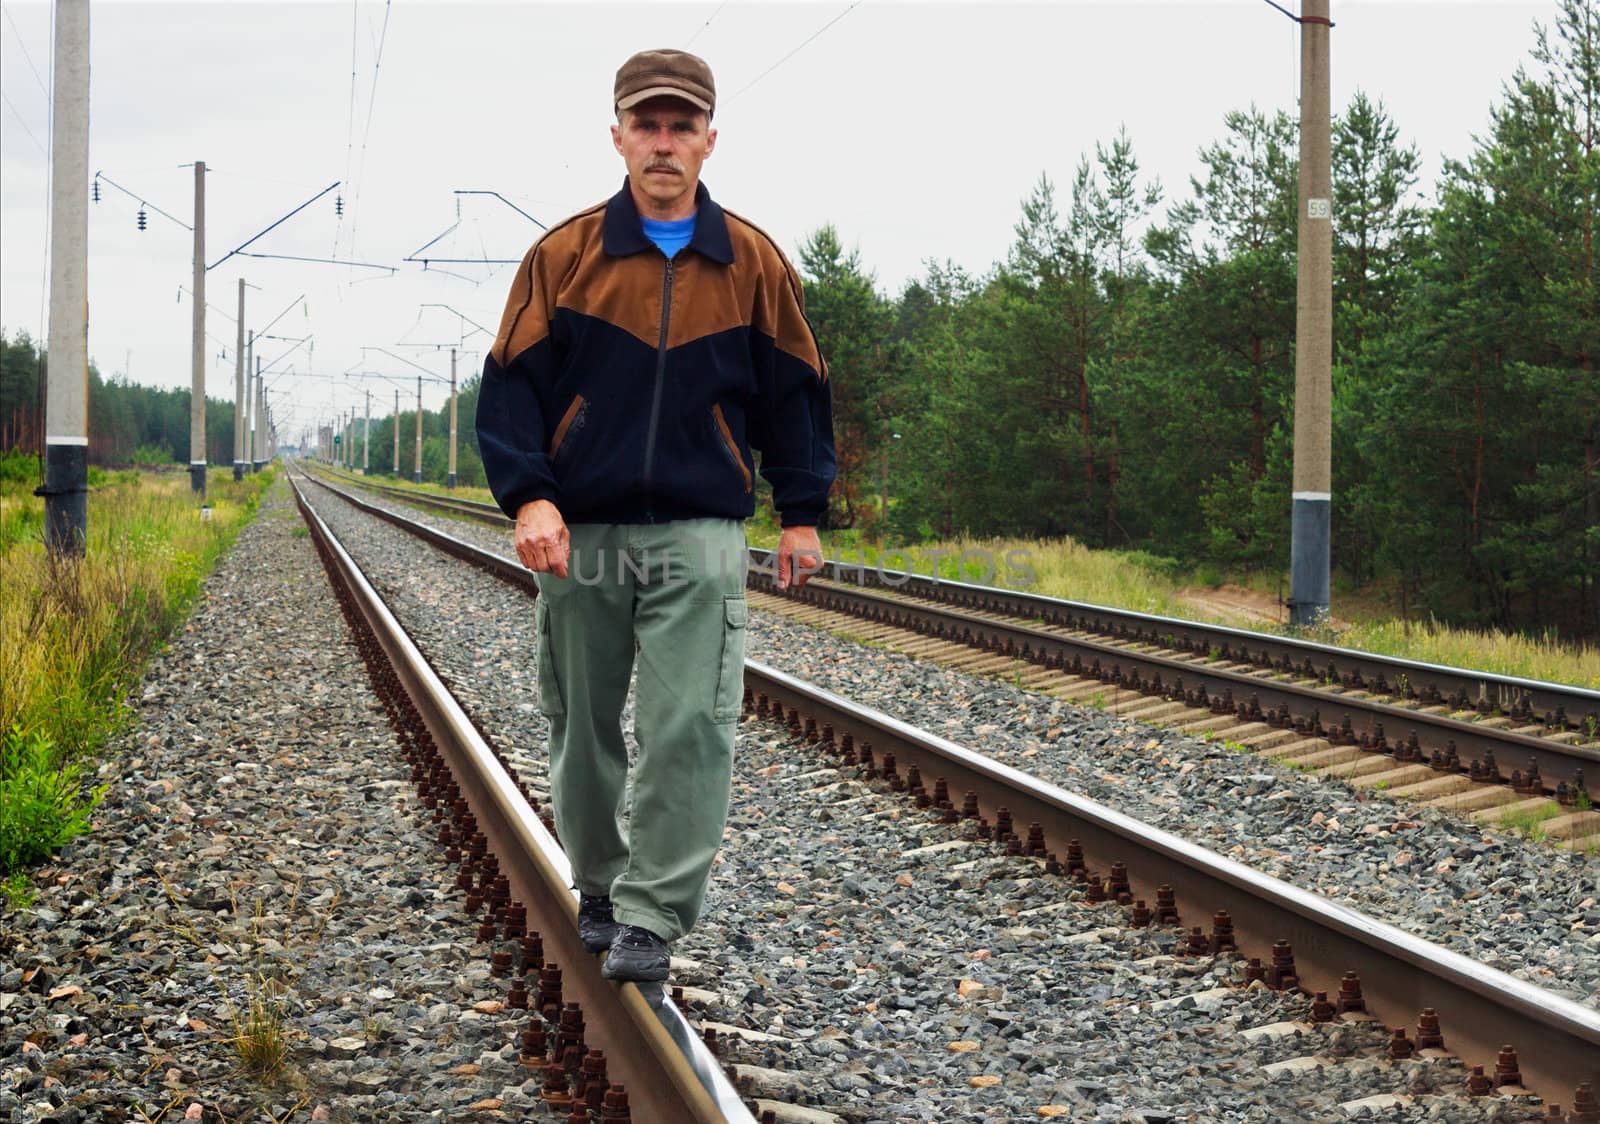 An elderly man walking on railway track